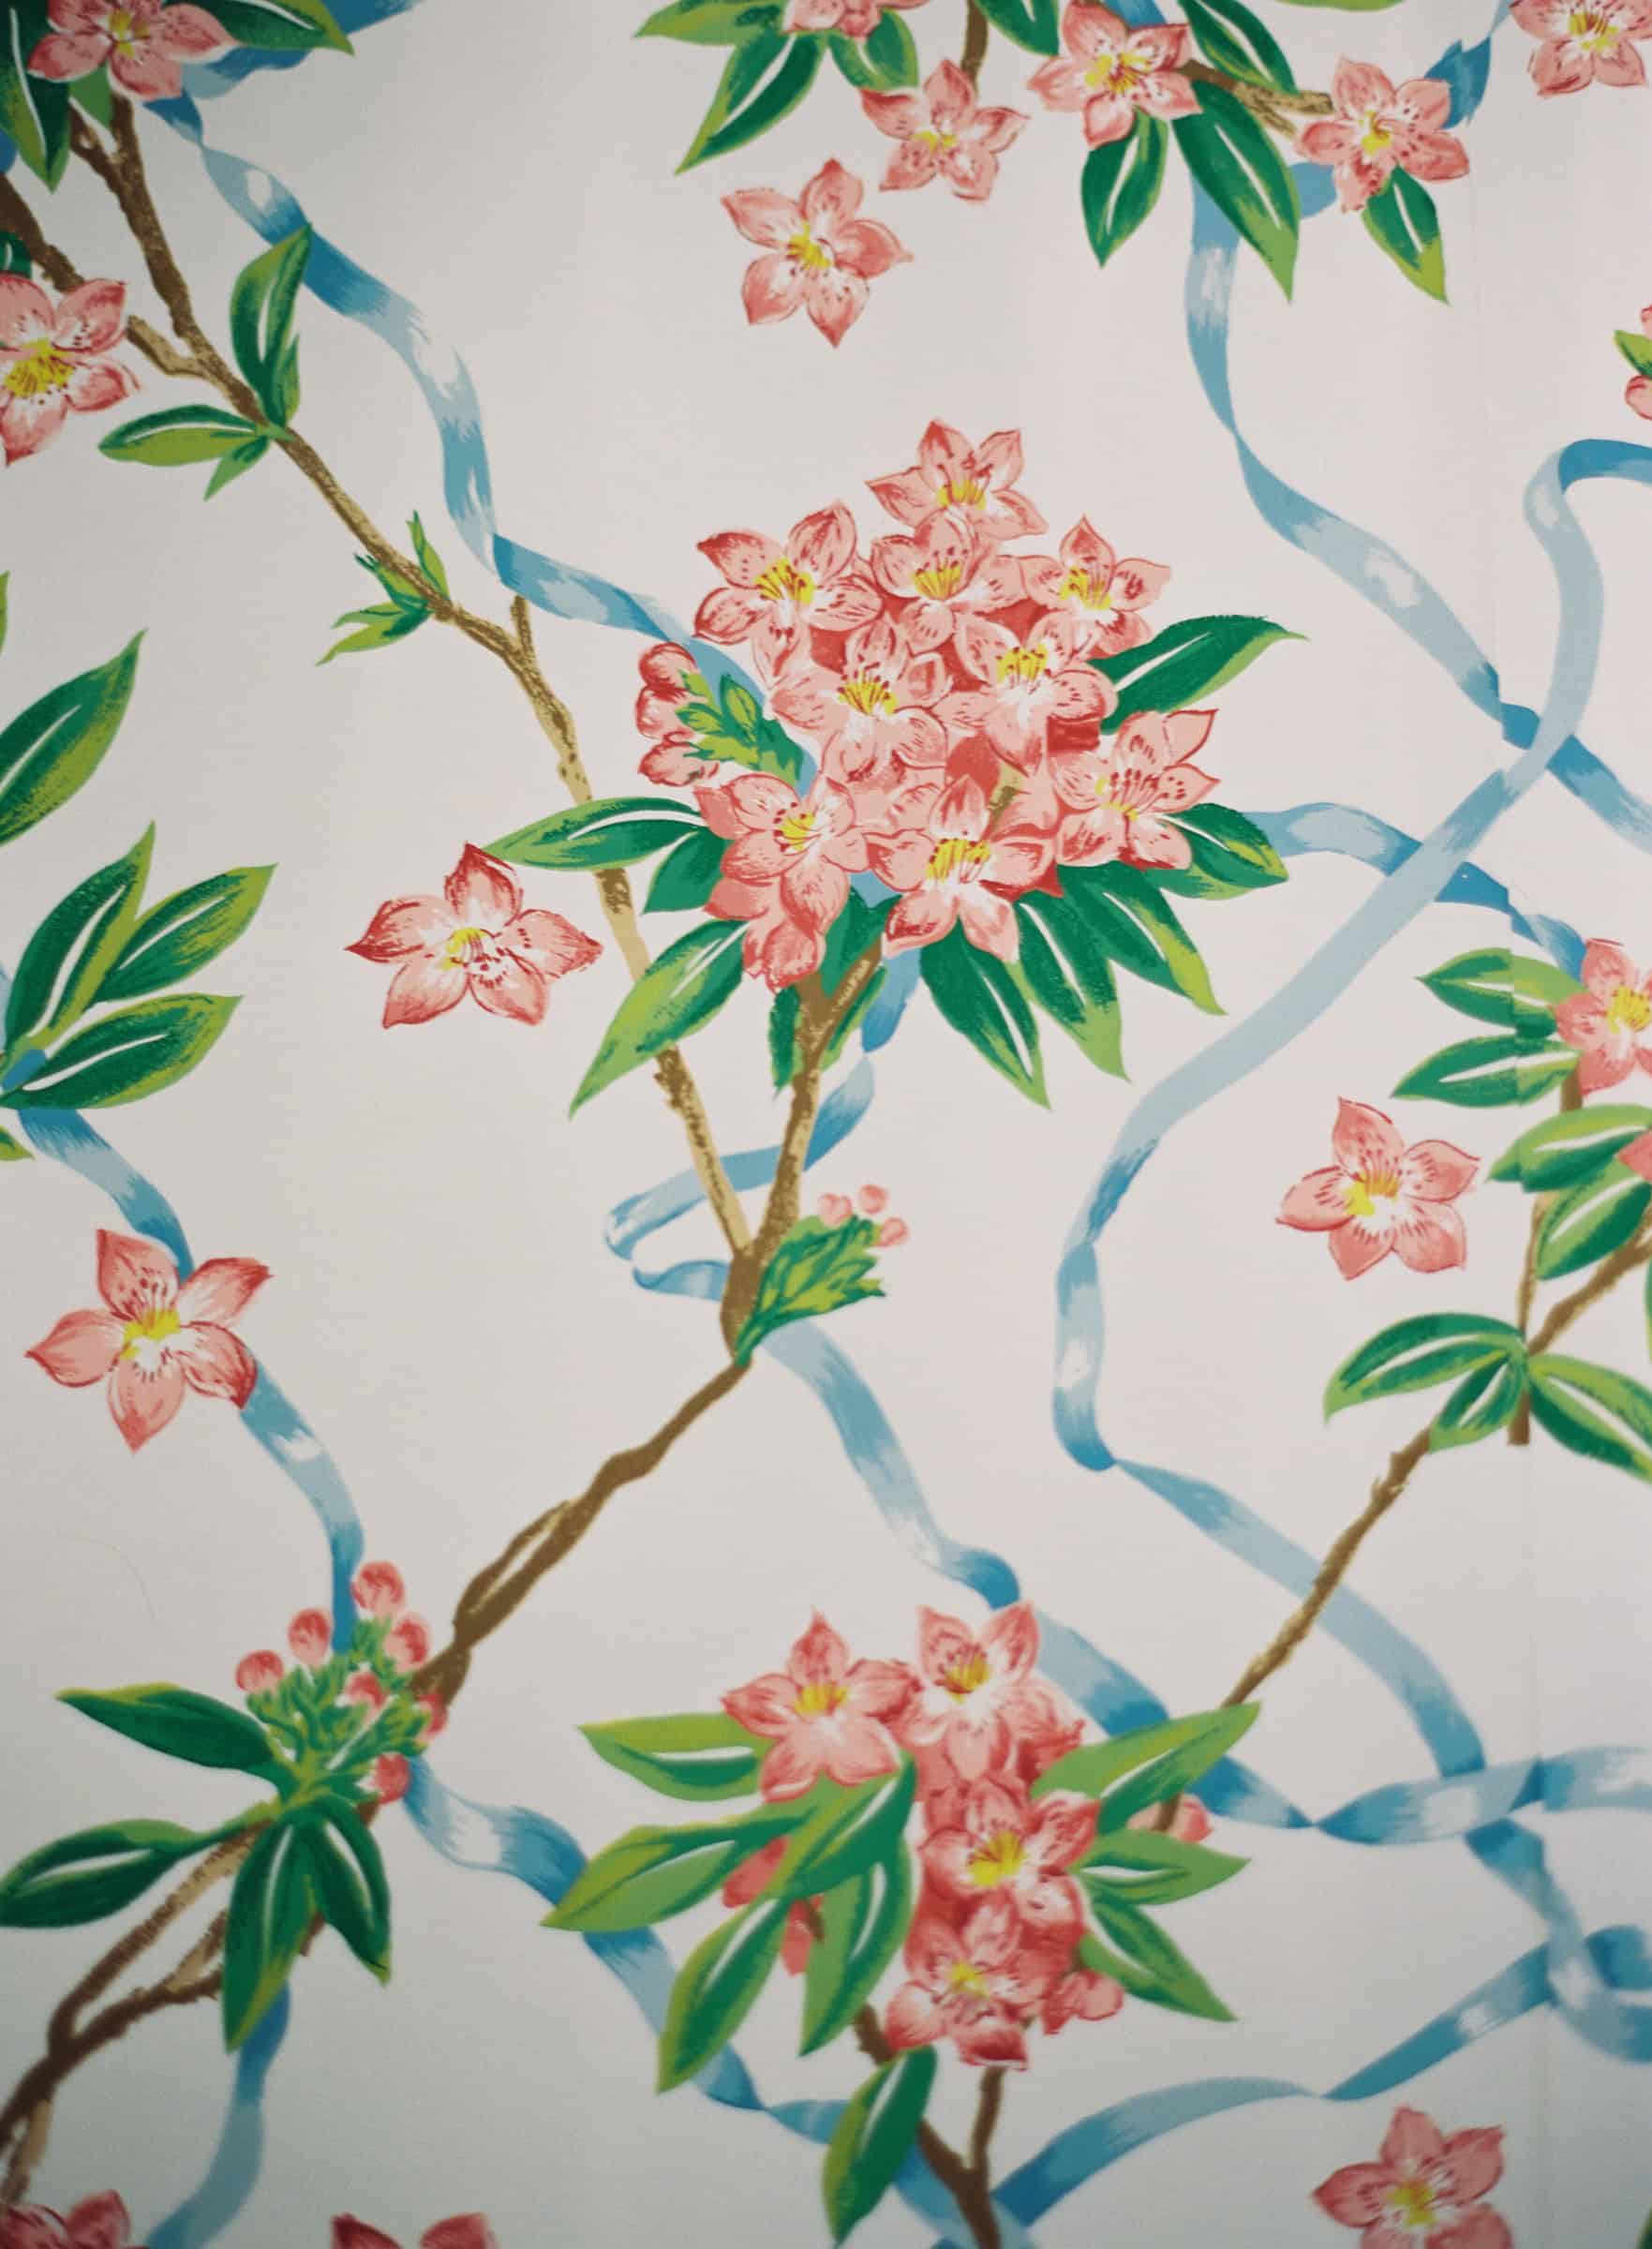 dorothy draper floral wallpaper at the Greenbrier resort